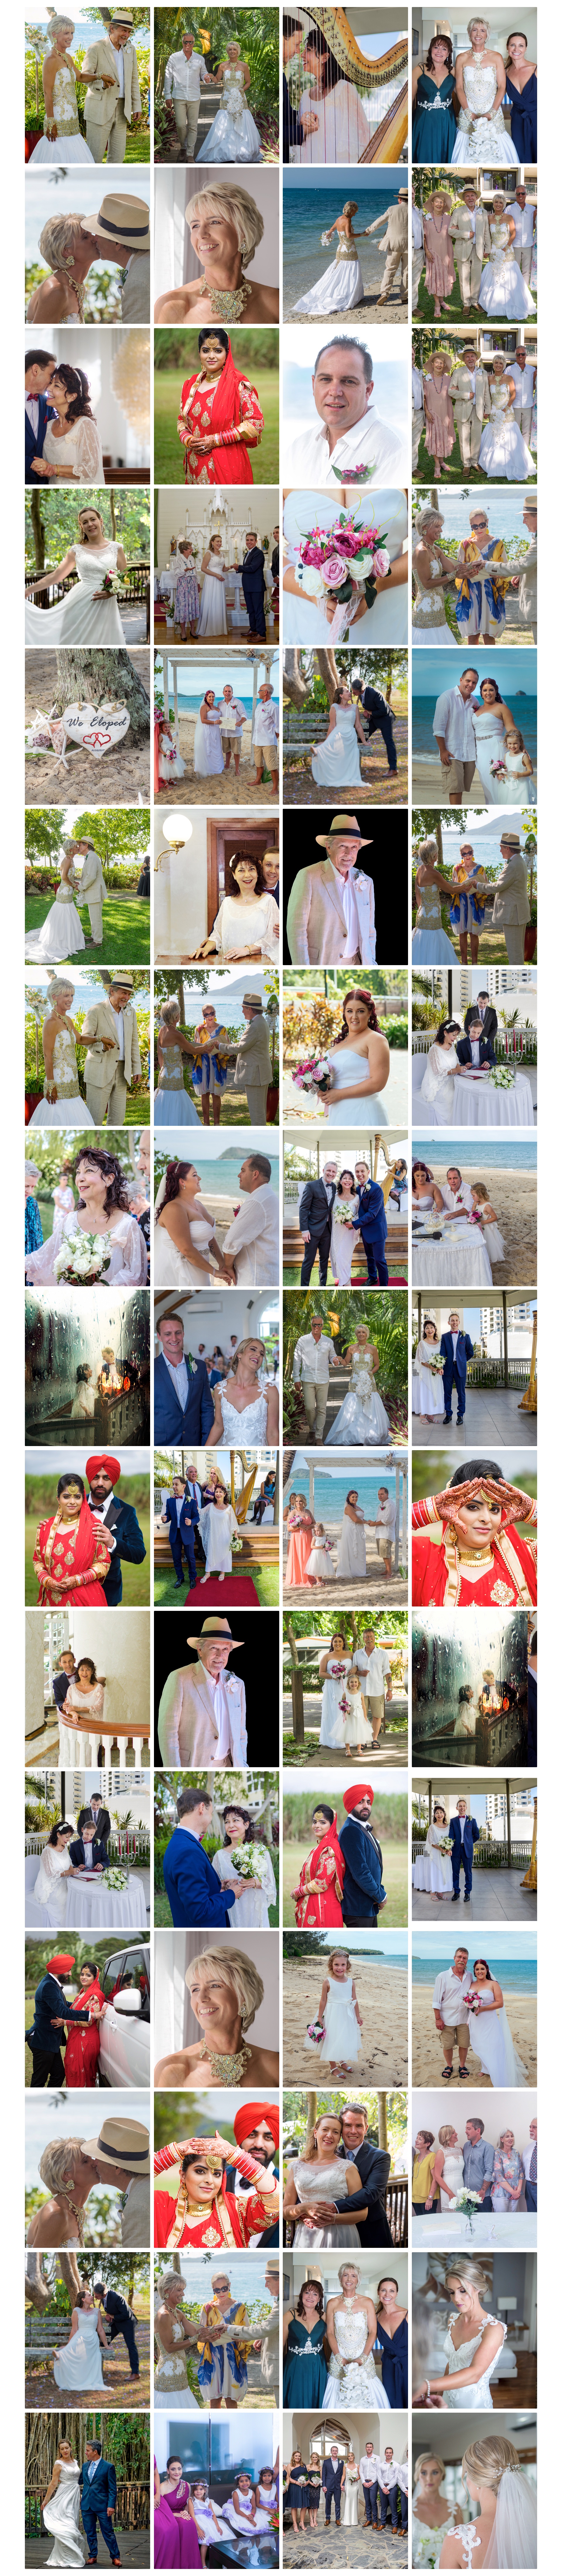 Gallery Photos  od Wedding by MP wedding photography